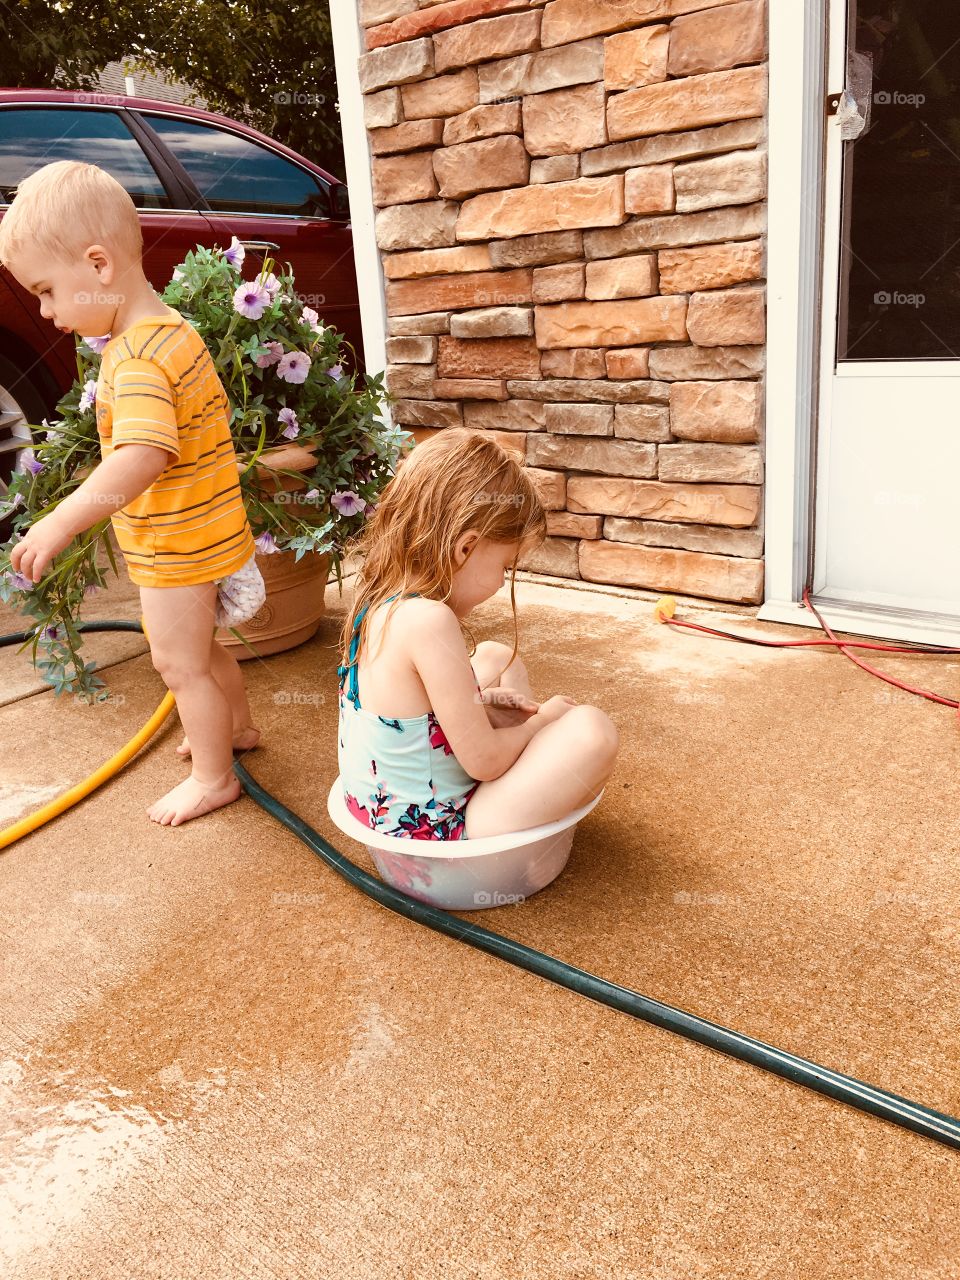 Children playing in the garden hose